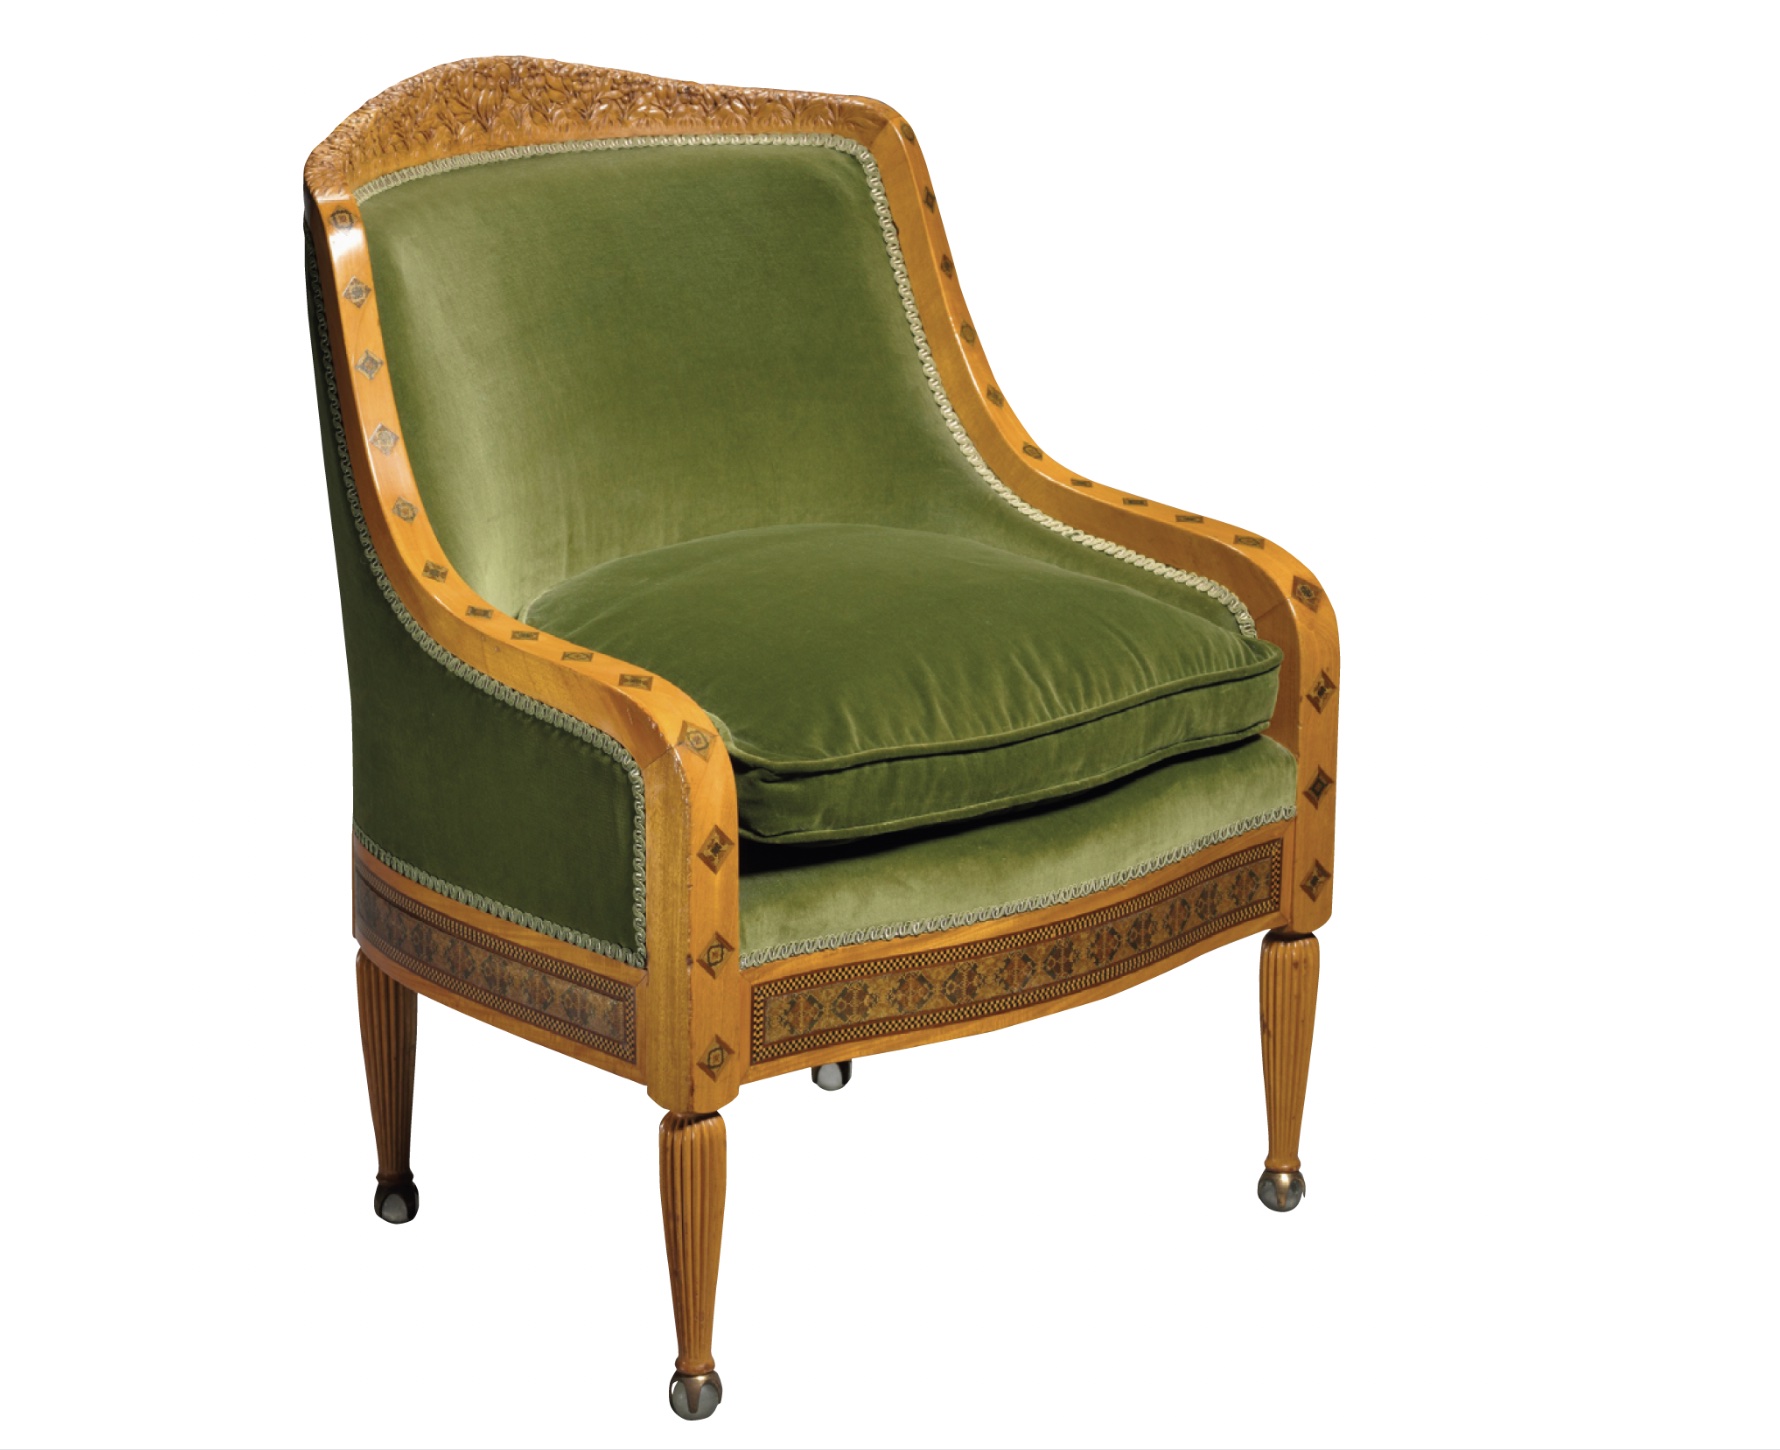 Louis Comfort Tiffany (1848–1933) armchair, c. 1891–1893, Tiffany Glass & Decorating Company